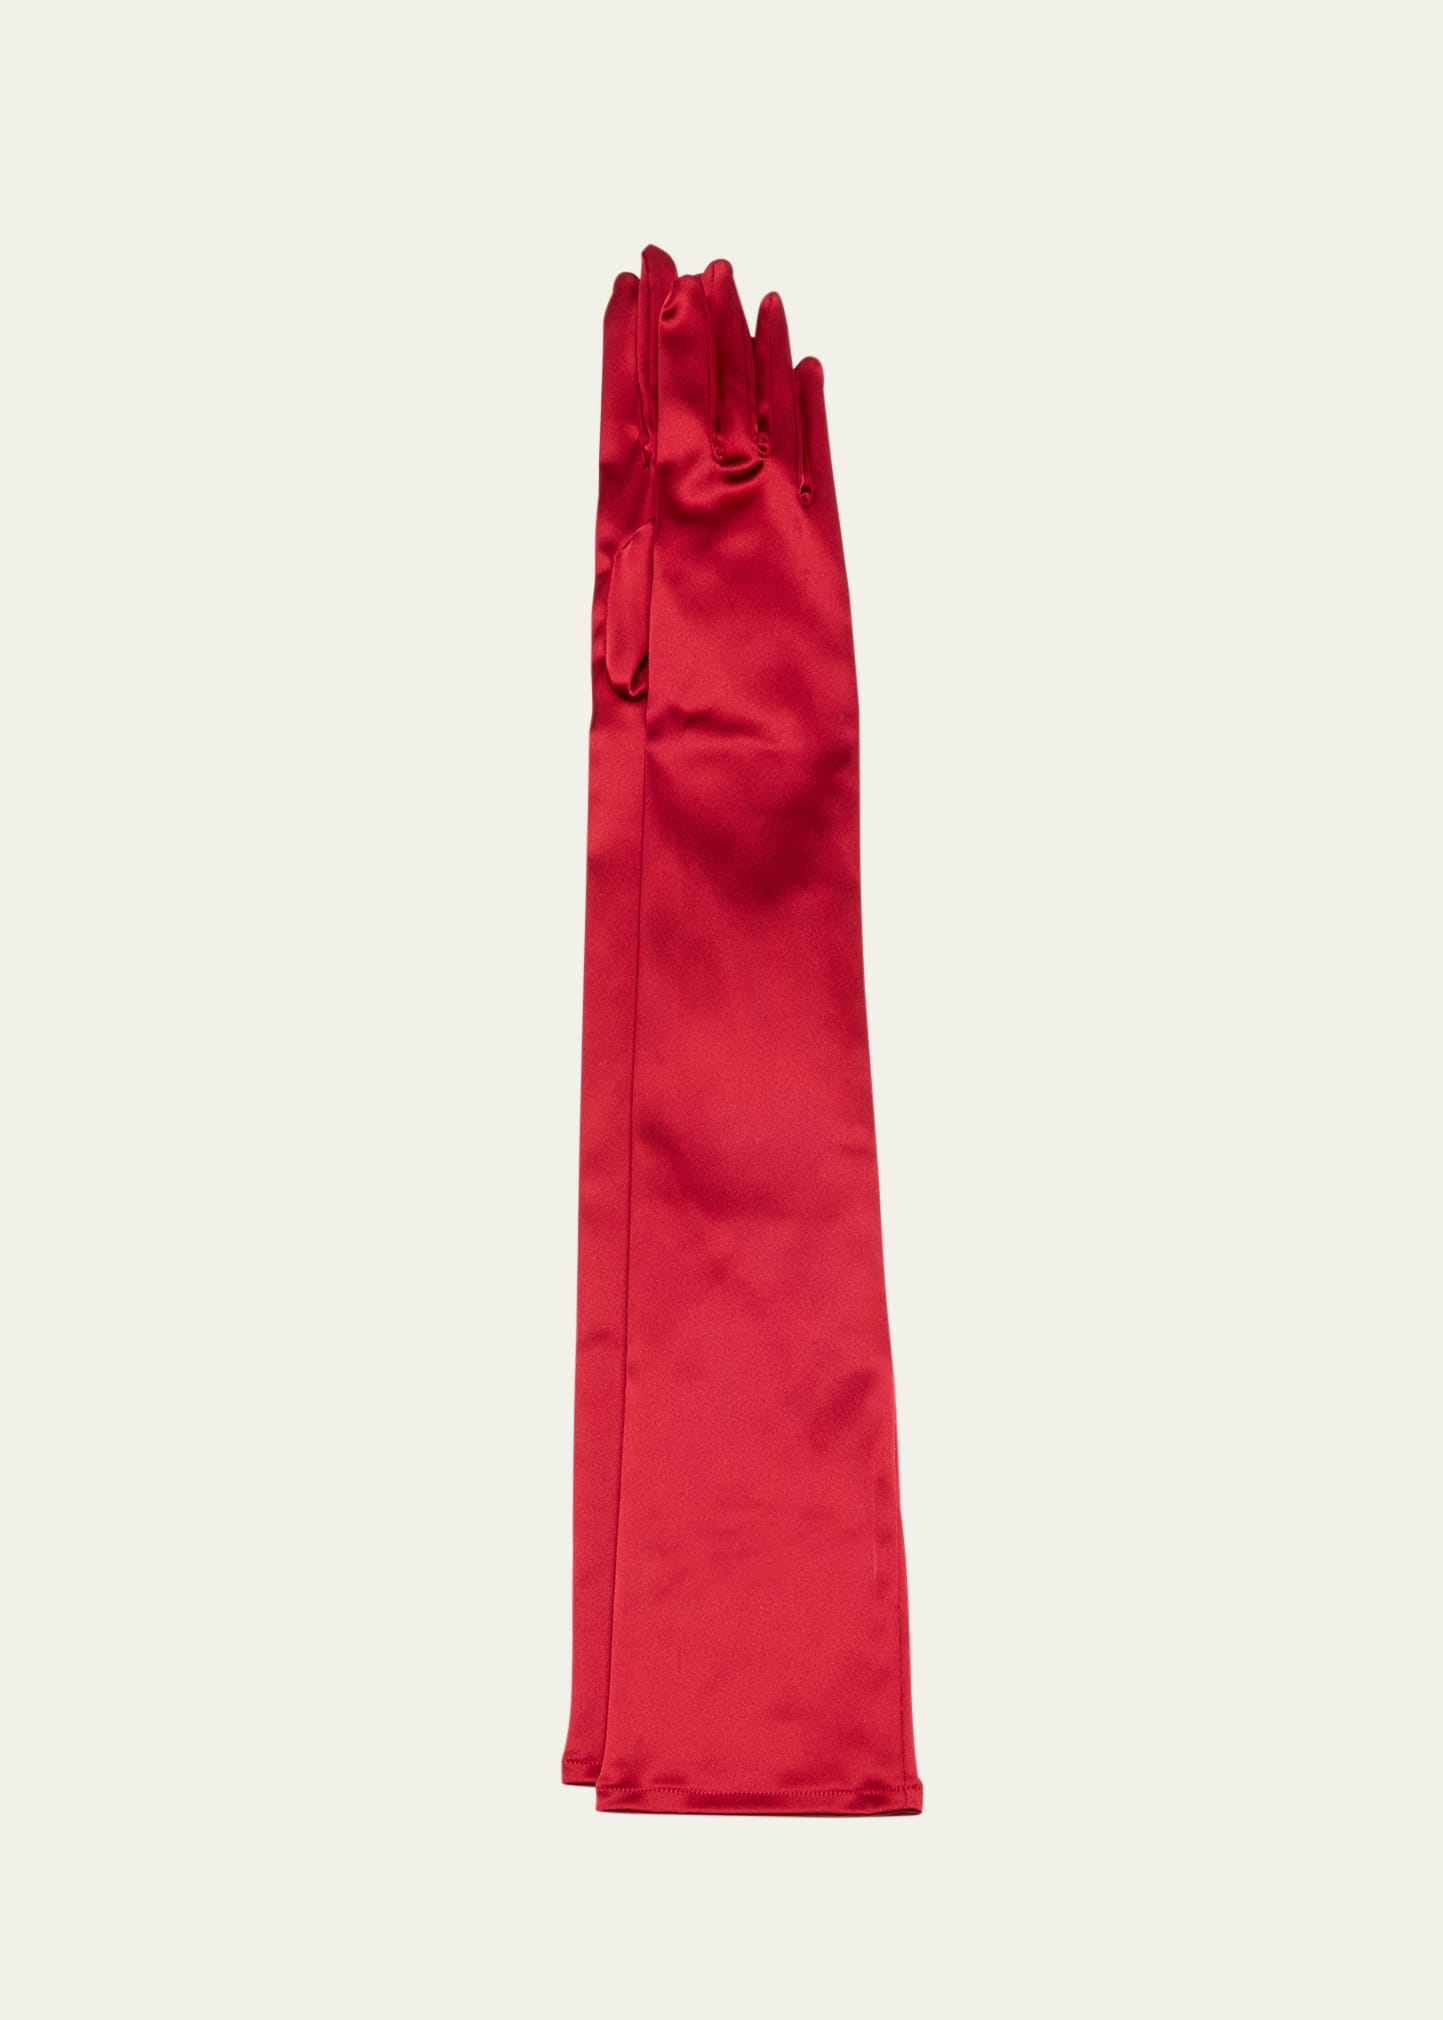 Sfilata Long Red Satin Gloves